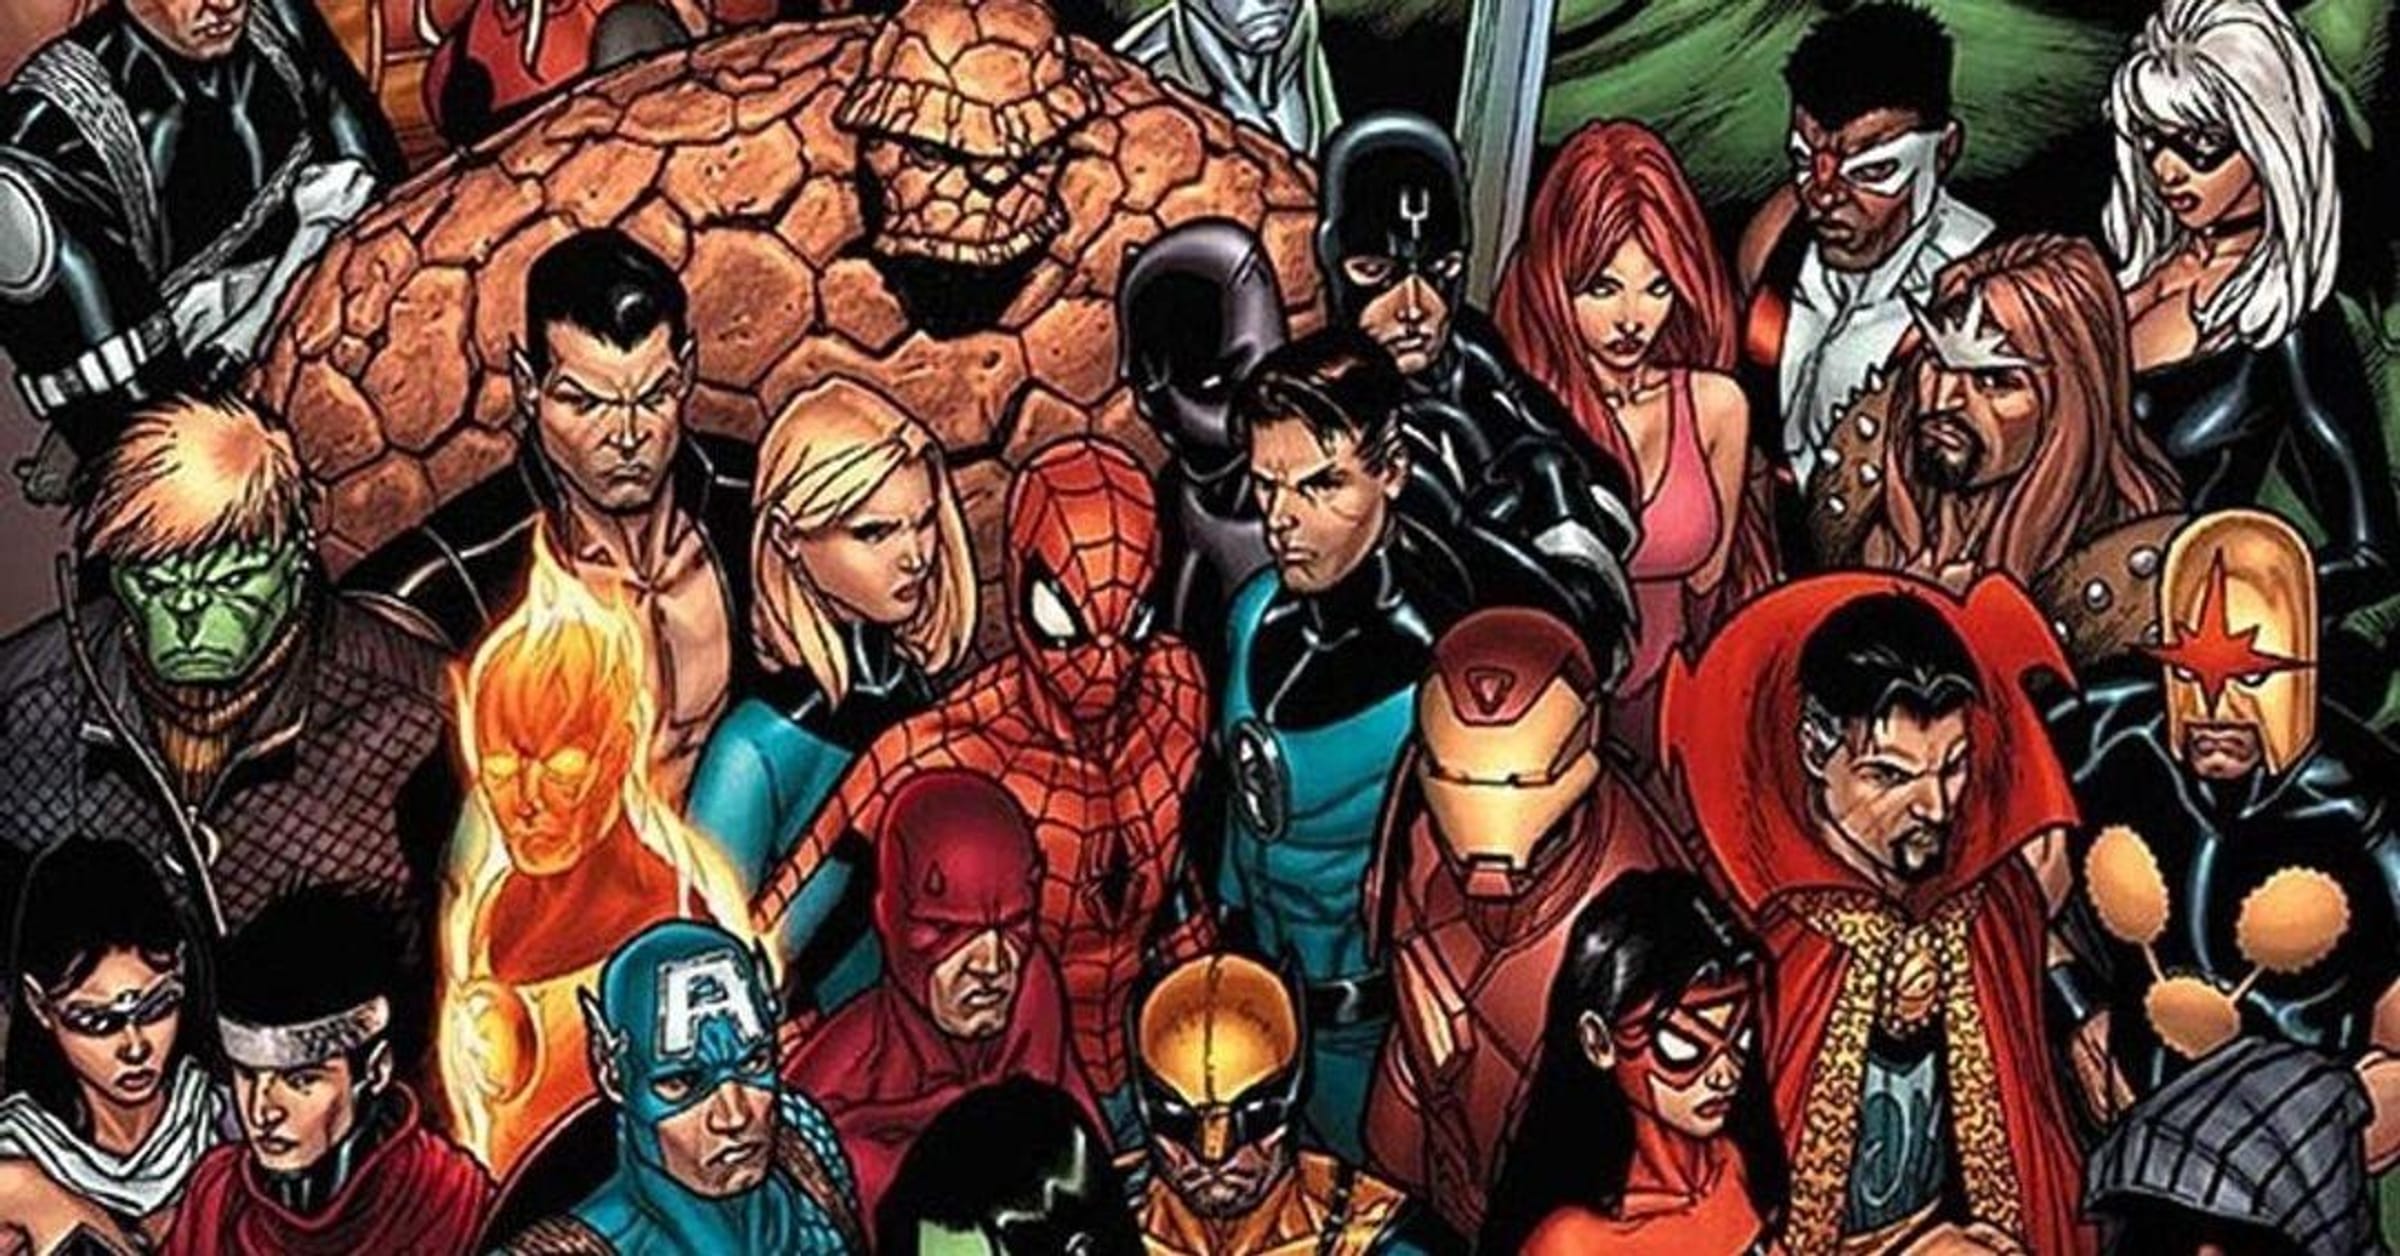 marvel heroes  Marvel superheroes, Superhero, New superheroes